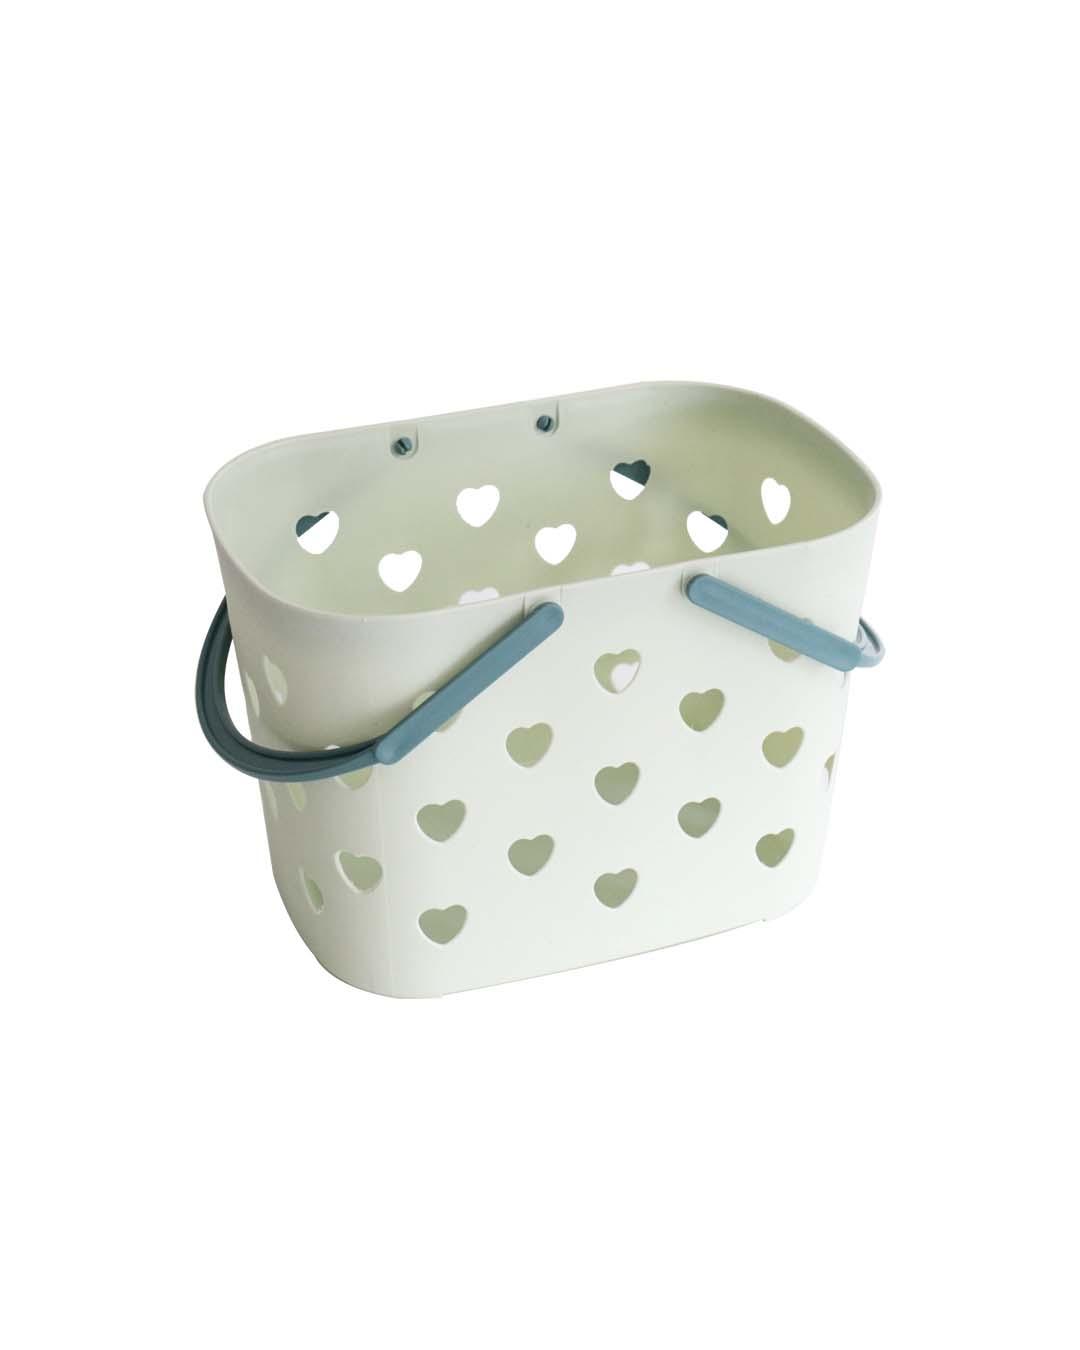 Basket with Handles, Heart Shaped Cut Design, Light Green, Plastic - MARKET 99